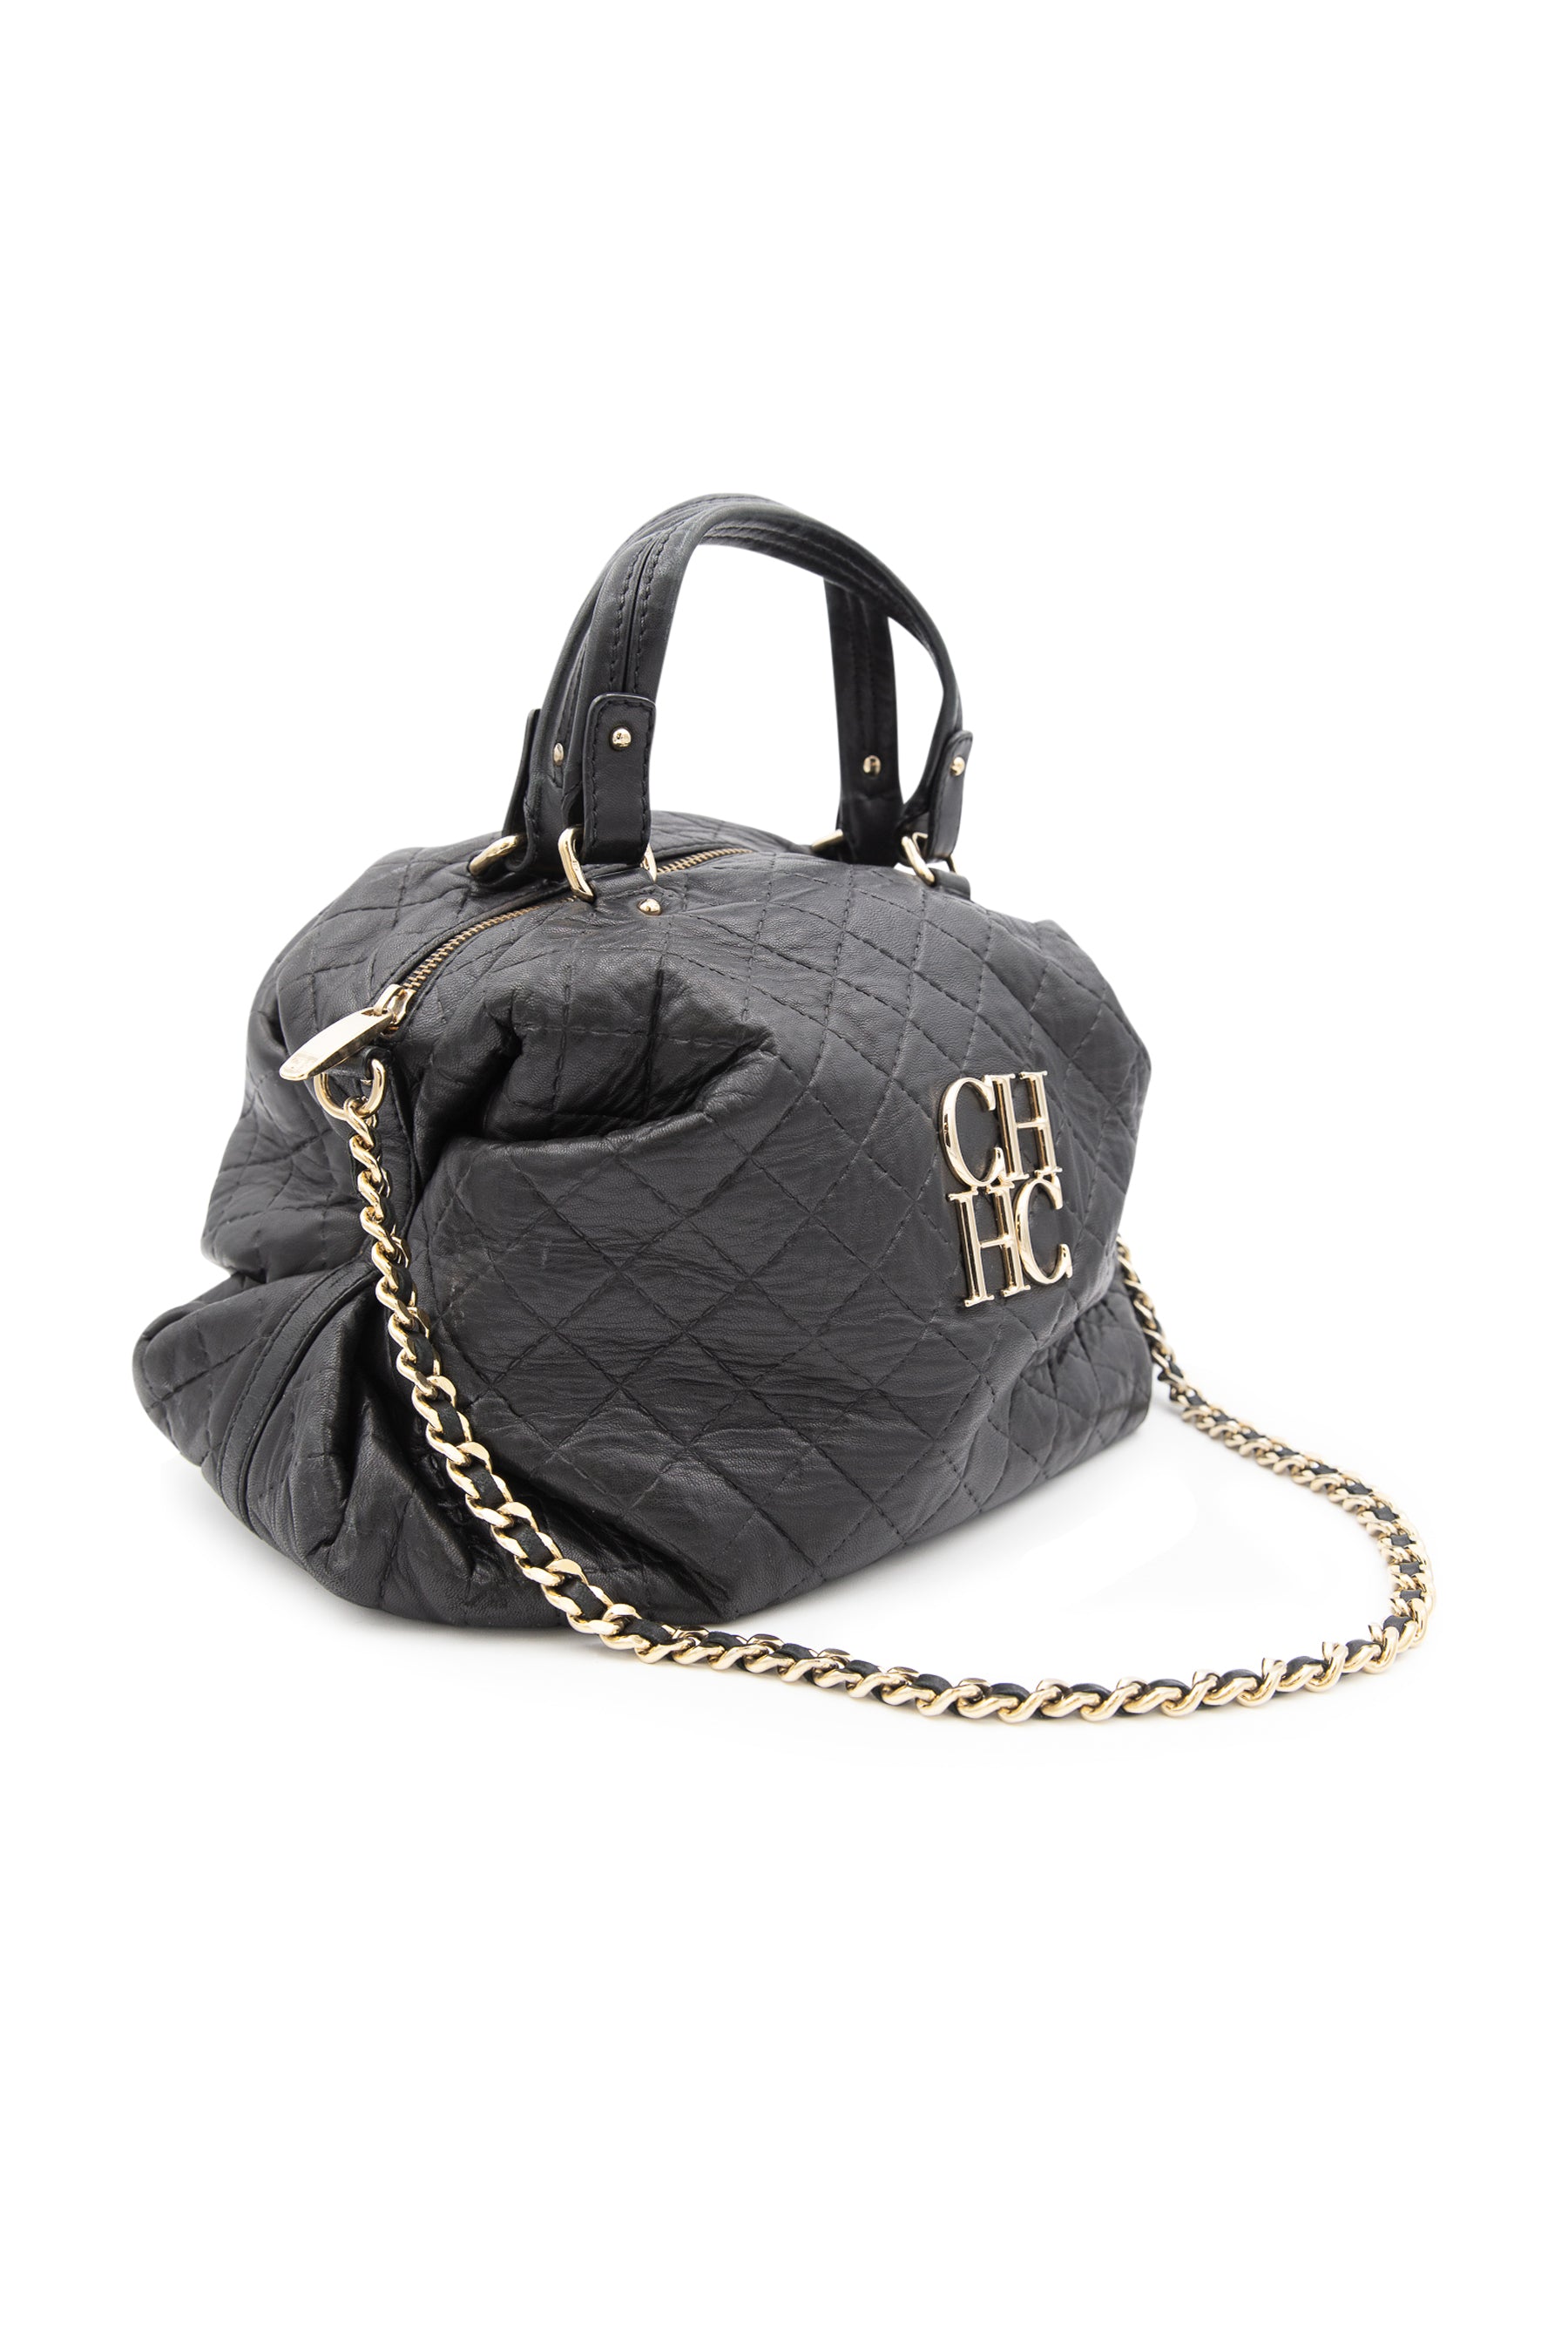 Bag Carolina Herrera Tote Editors Leather Navy Blue Ch 100% Original New